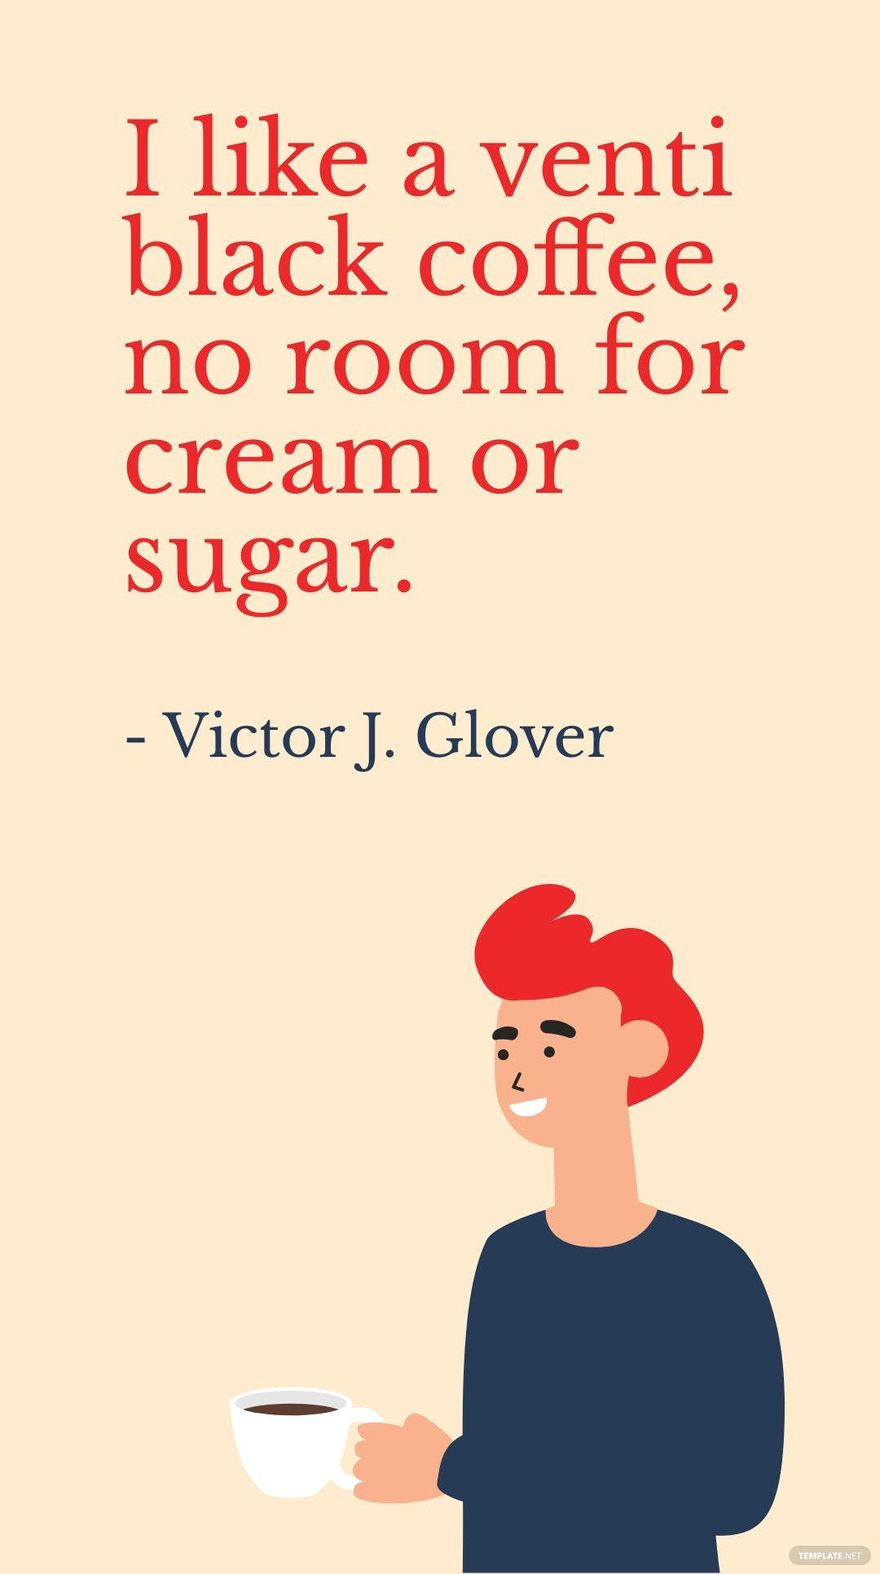 Free Victor J. Glover - I like a venti black coffee, no room for cream or sugar. in JPG